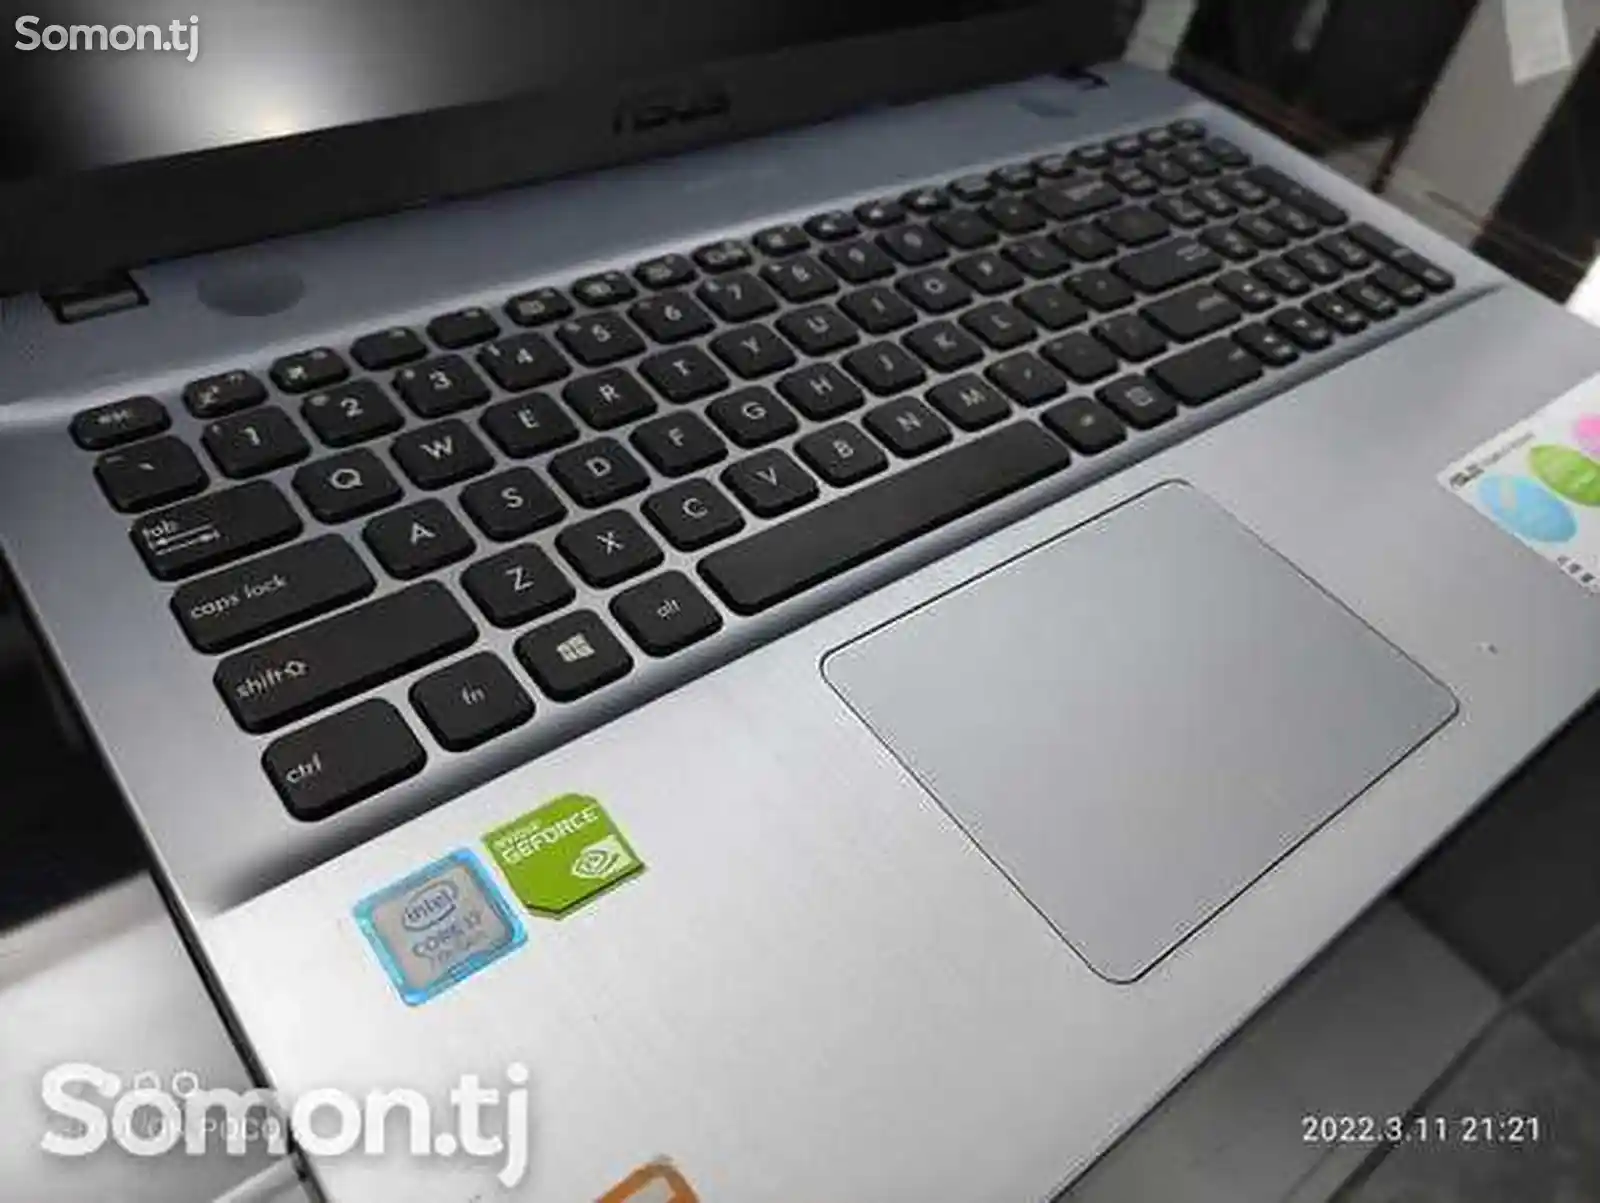 Игровой ноутбук Asus X541UJ i7-7500U DDR4 8GB GEFORCE 920M 2GB-4